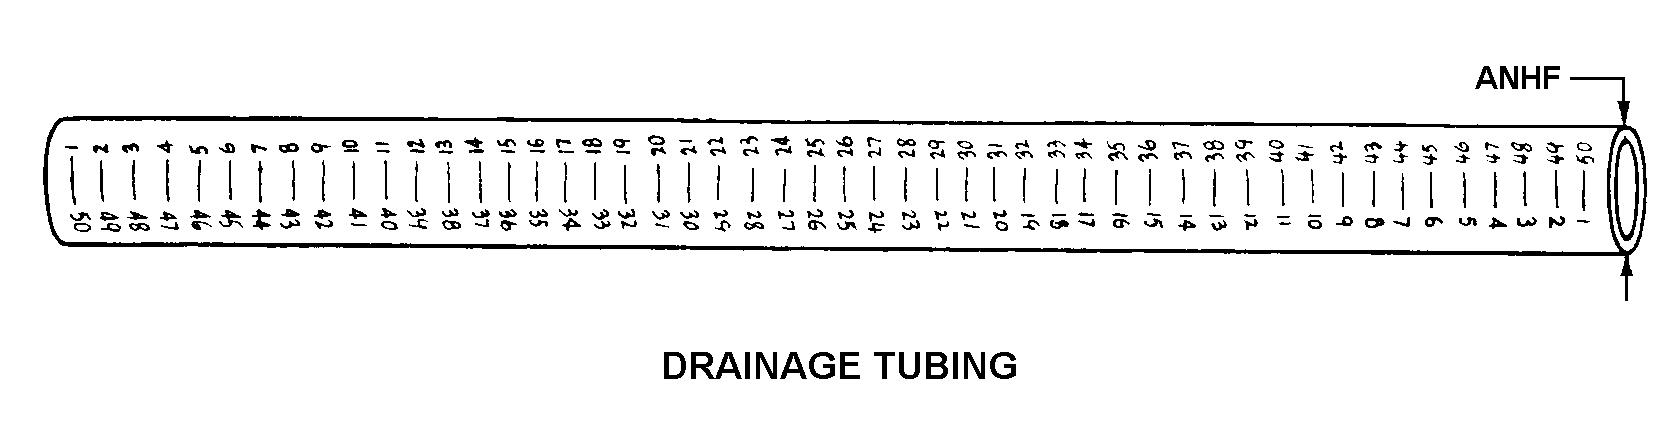 DRAINAGE TUBING style nsn 6515-01-273-8625